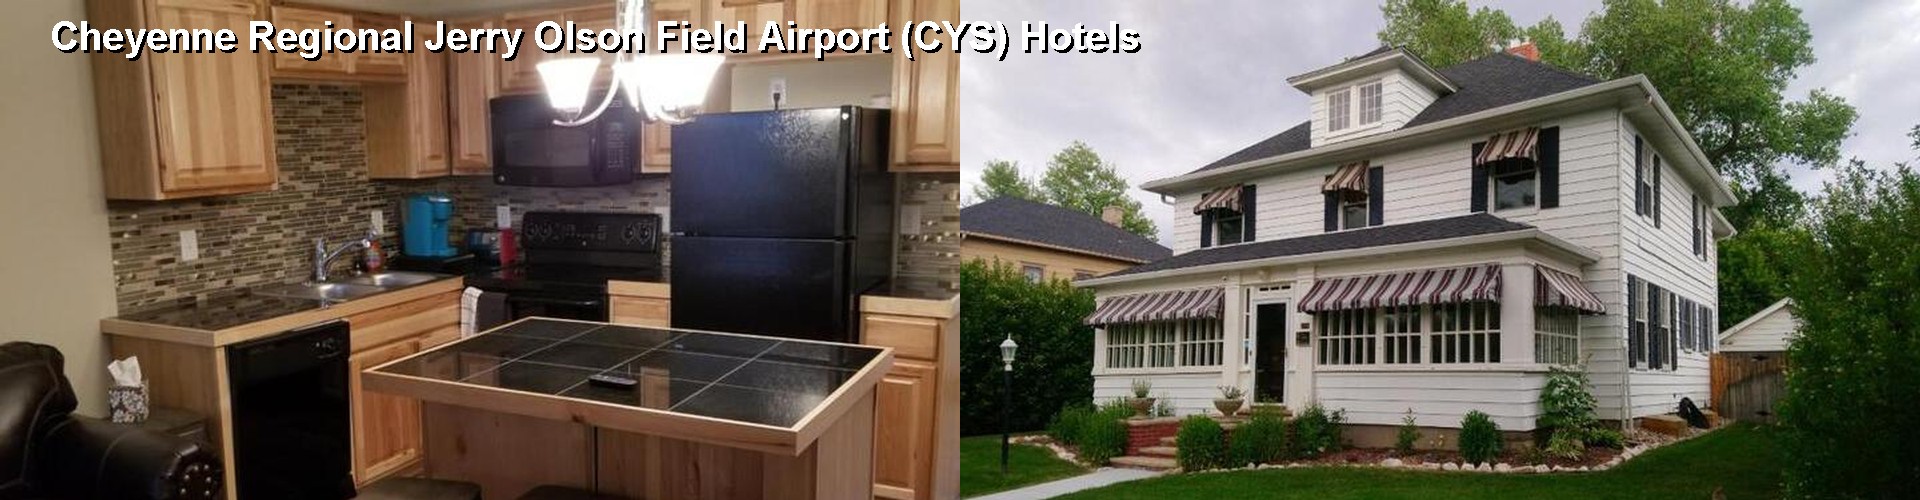 5 Best Hotels near Cheyenne Regional Jerry Olson Field Airport (CYS)